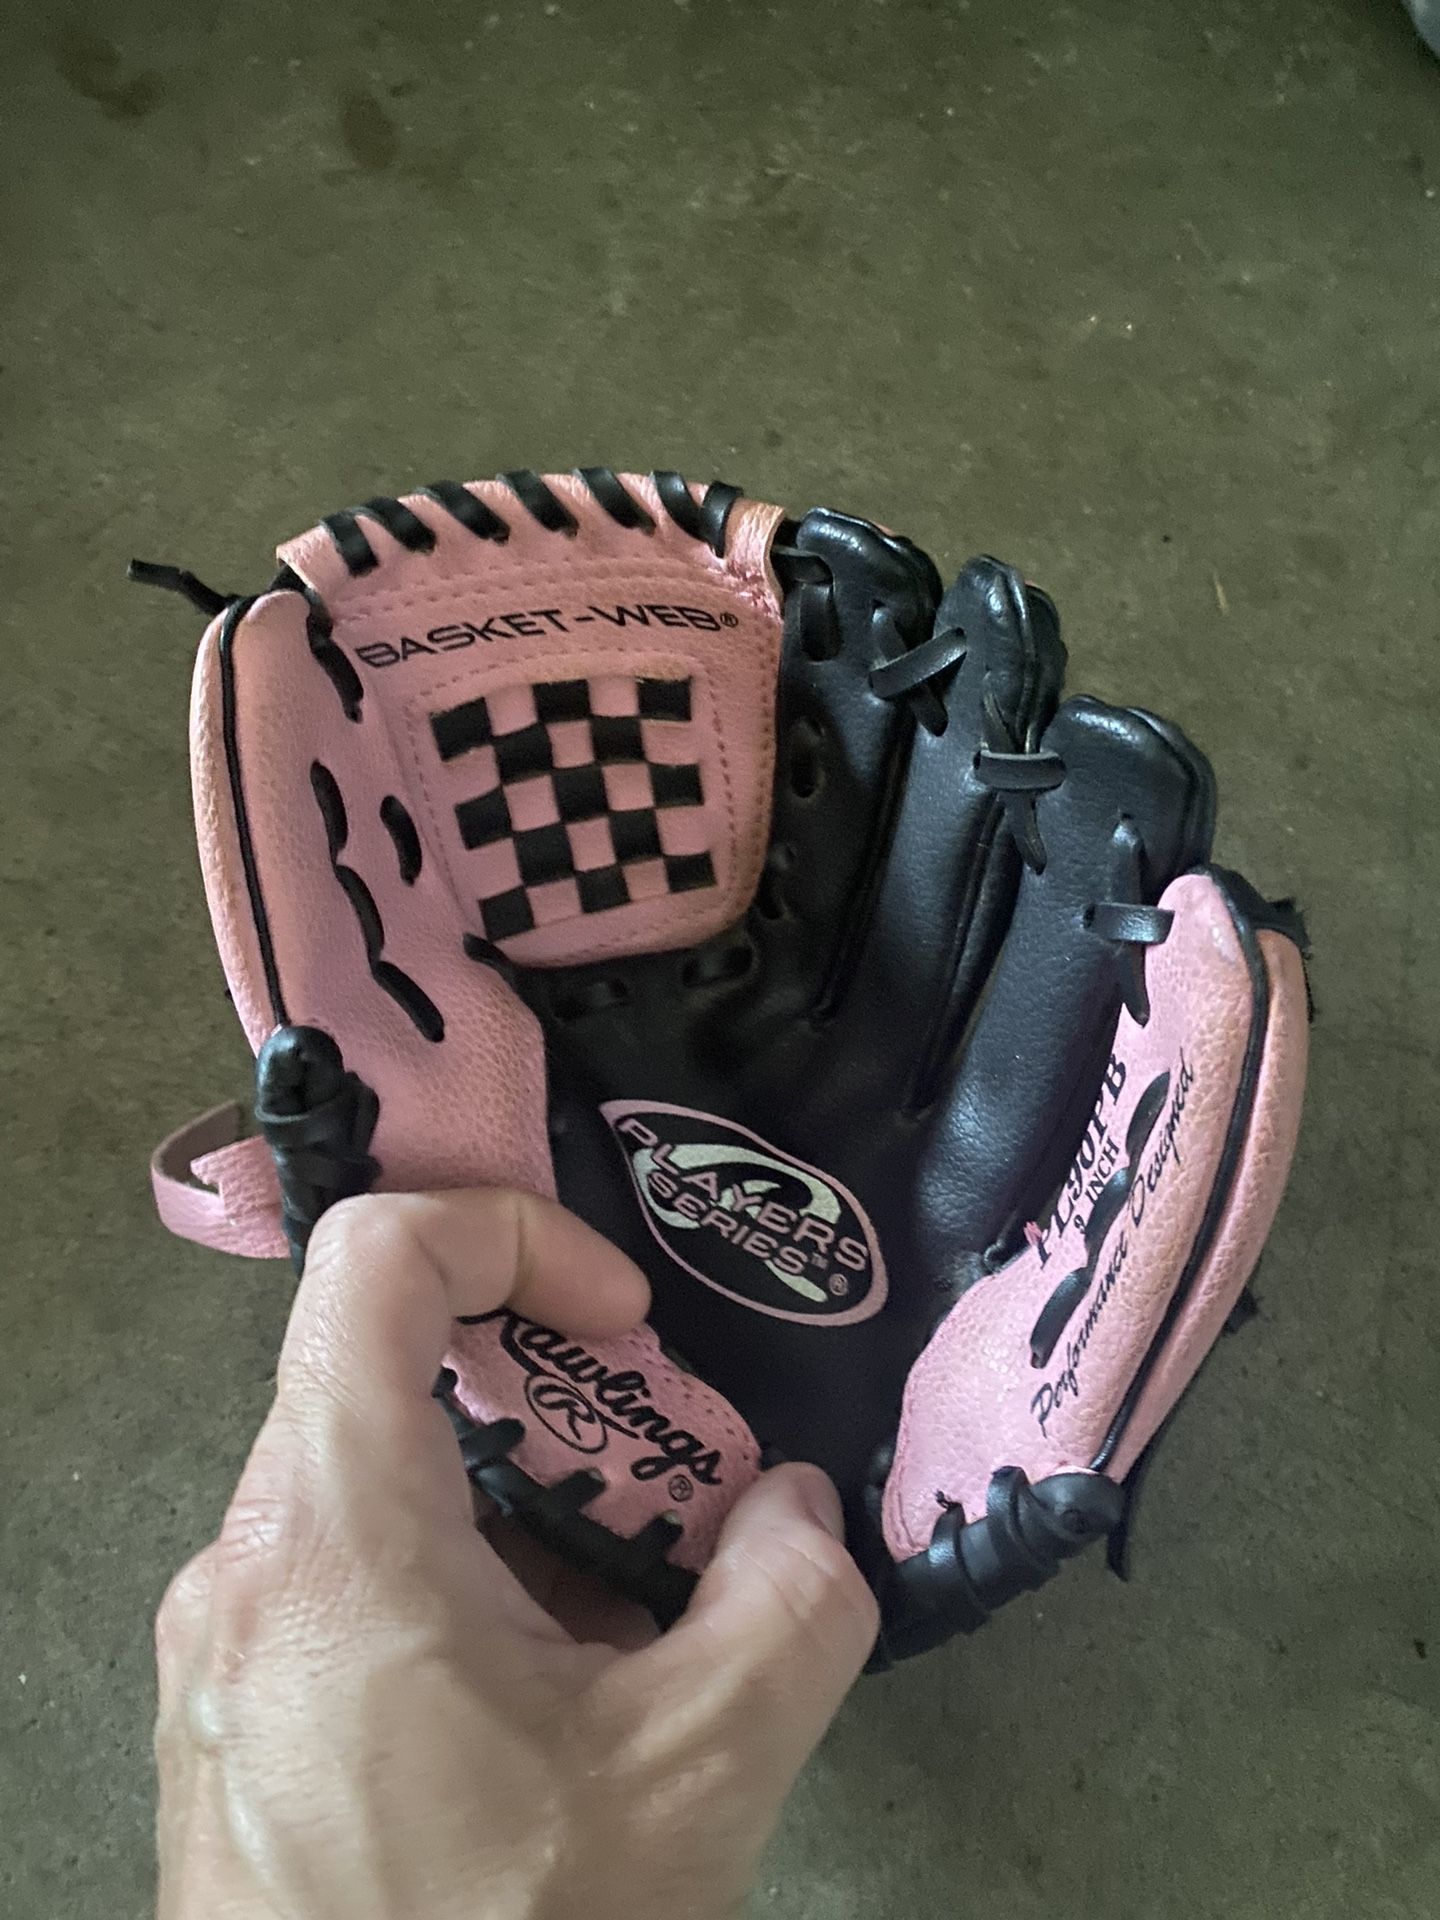 $10, Girls Pink/Black Tee-Ball Baseball Glove